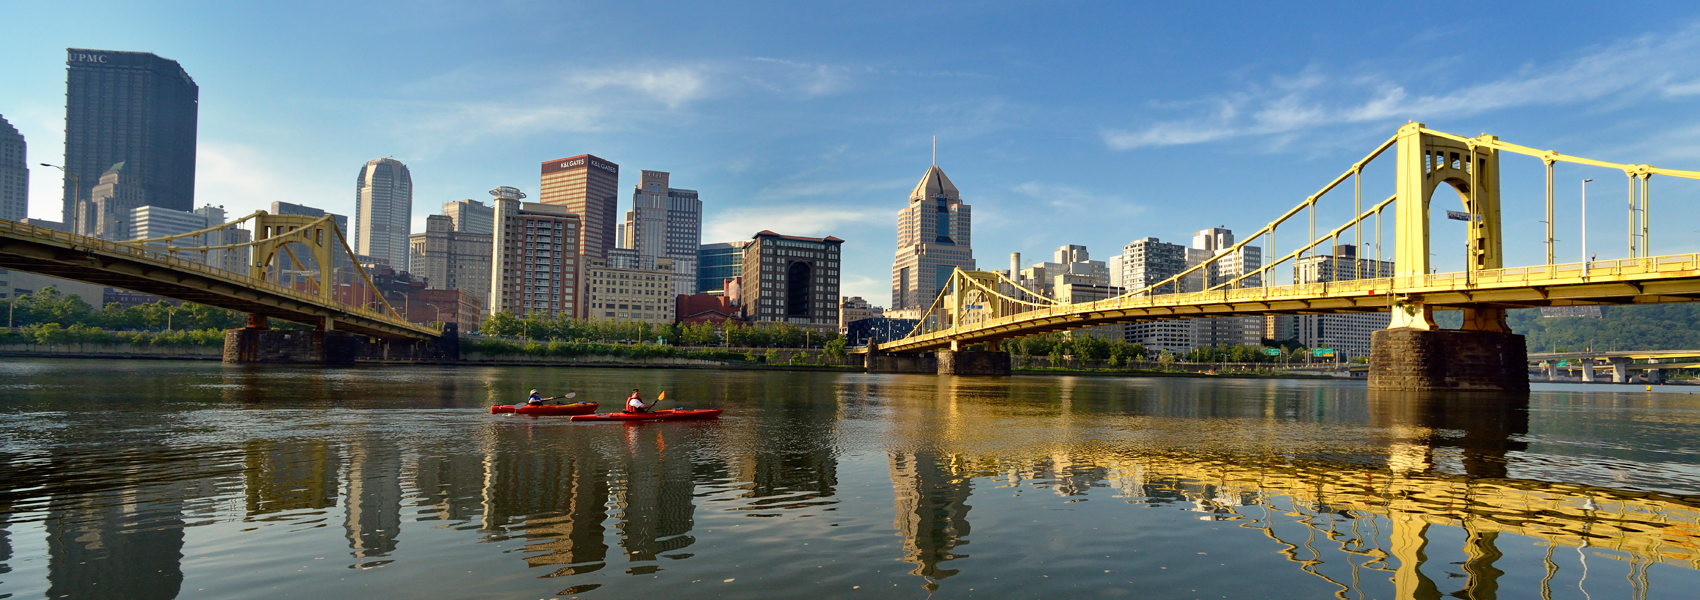 Pittsburgh #19